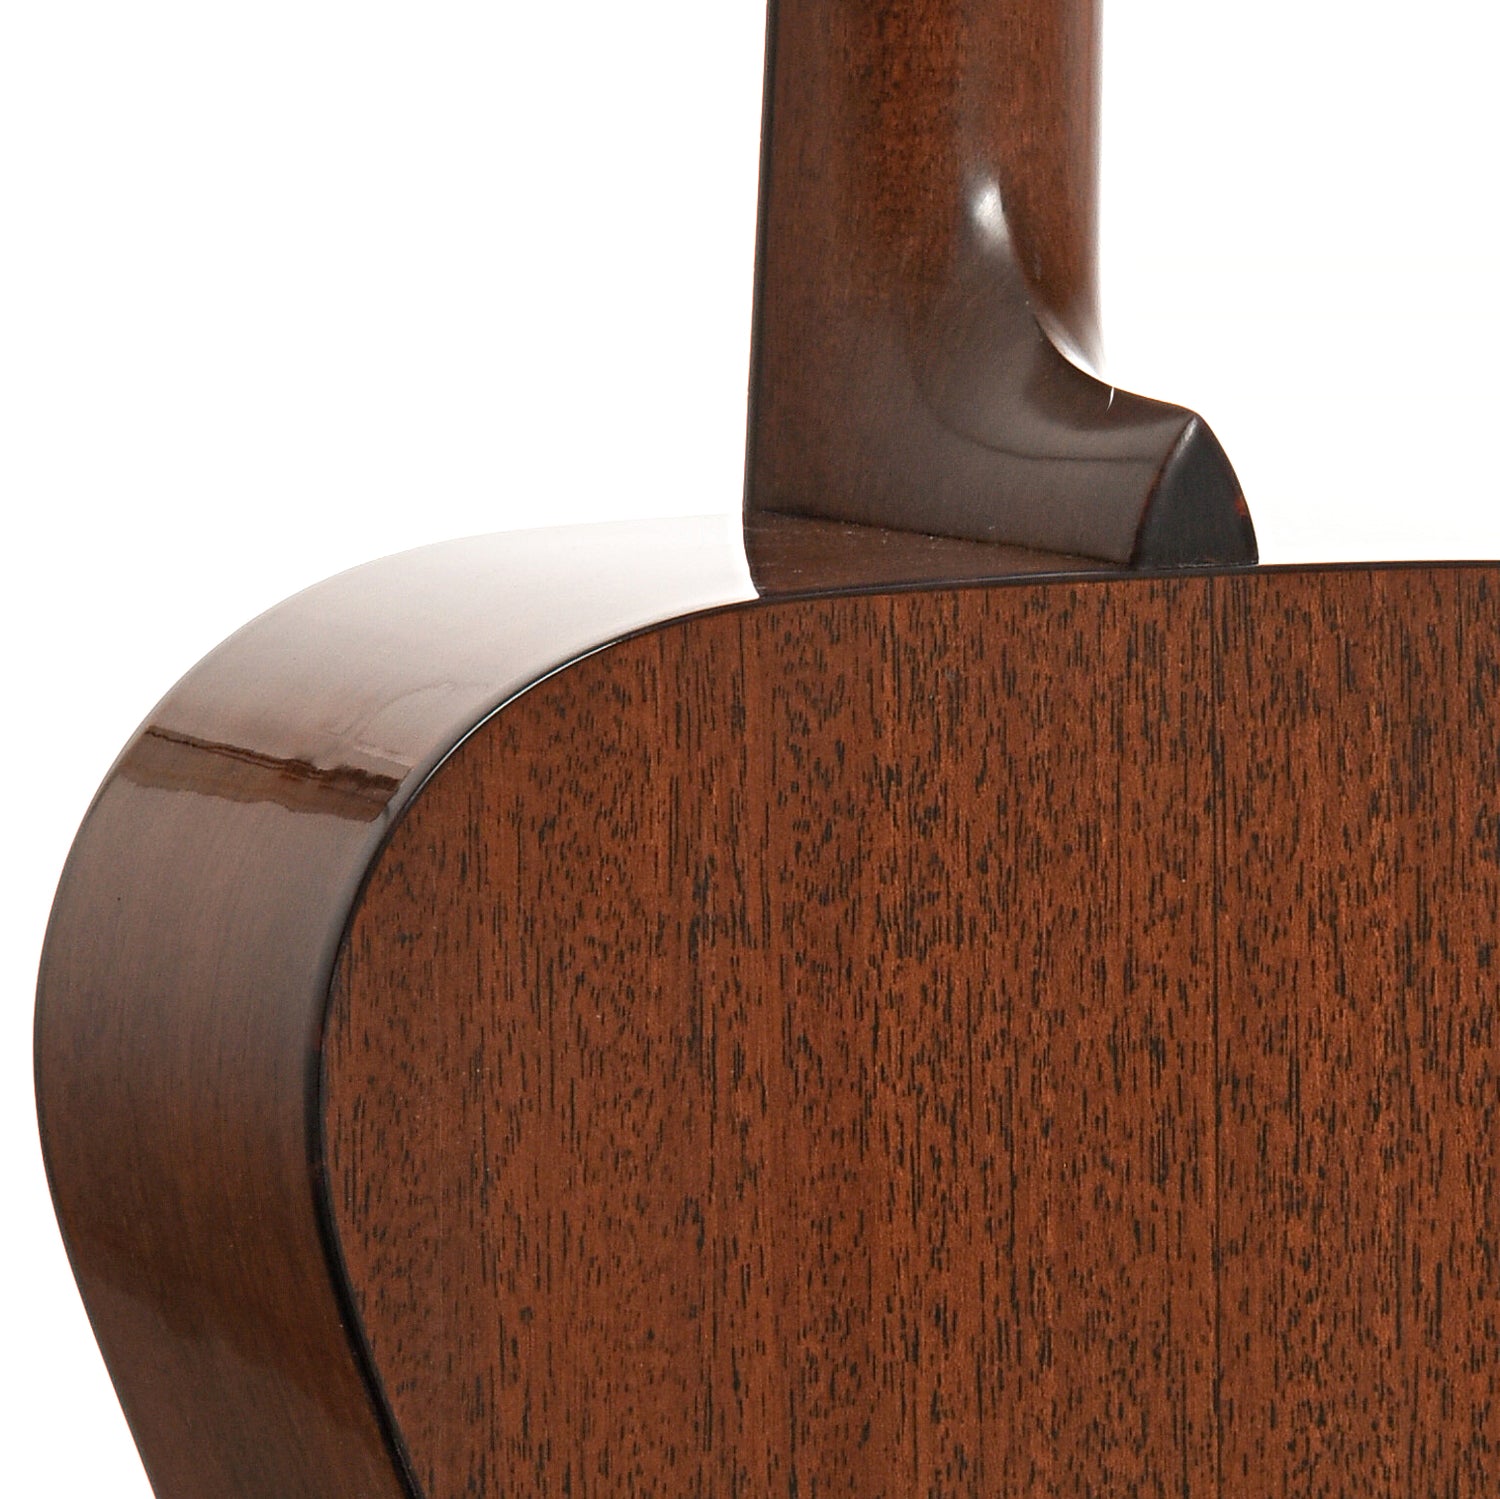 Heel of Pre-War Guitars Co. OM Mahogany, Level 1, Modern Neck Profile